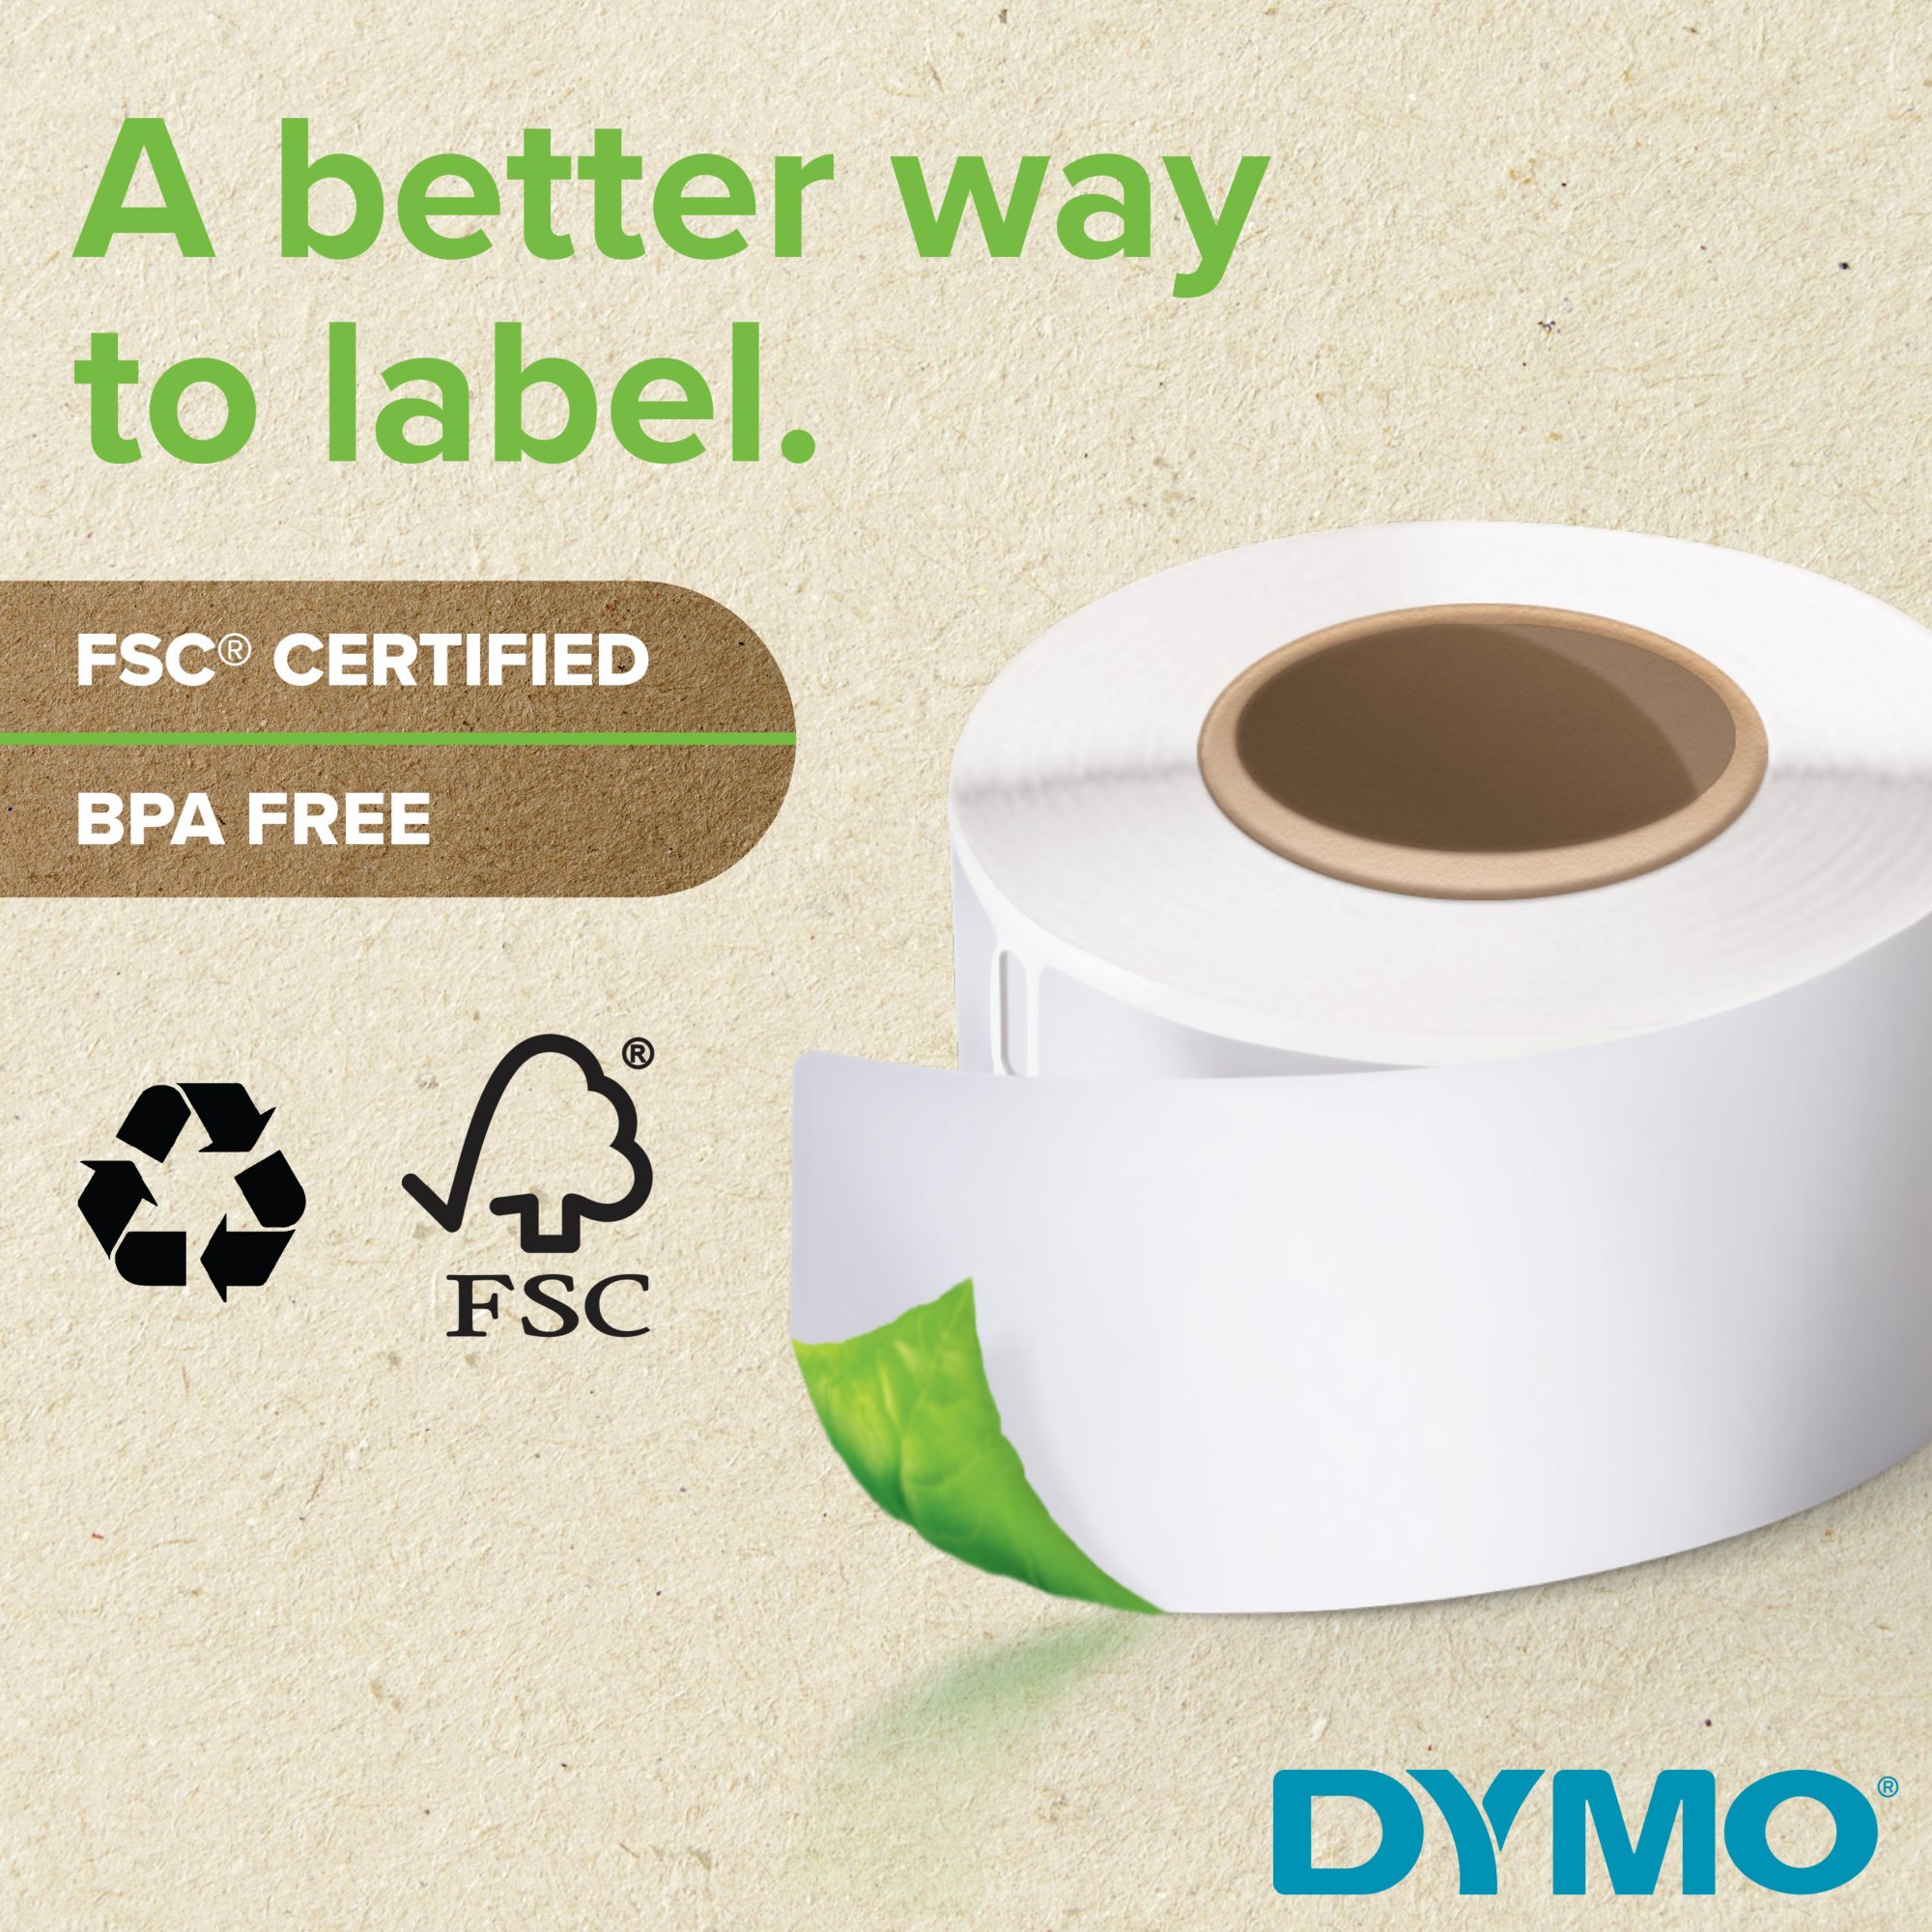 DYMO LabelWriter Label, 30572, White Address Label, 1-1/8 x 3-1/2, 2  Rolls of 260 (520 Total)